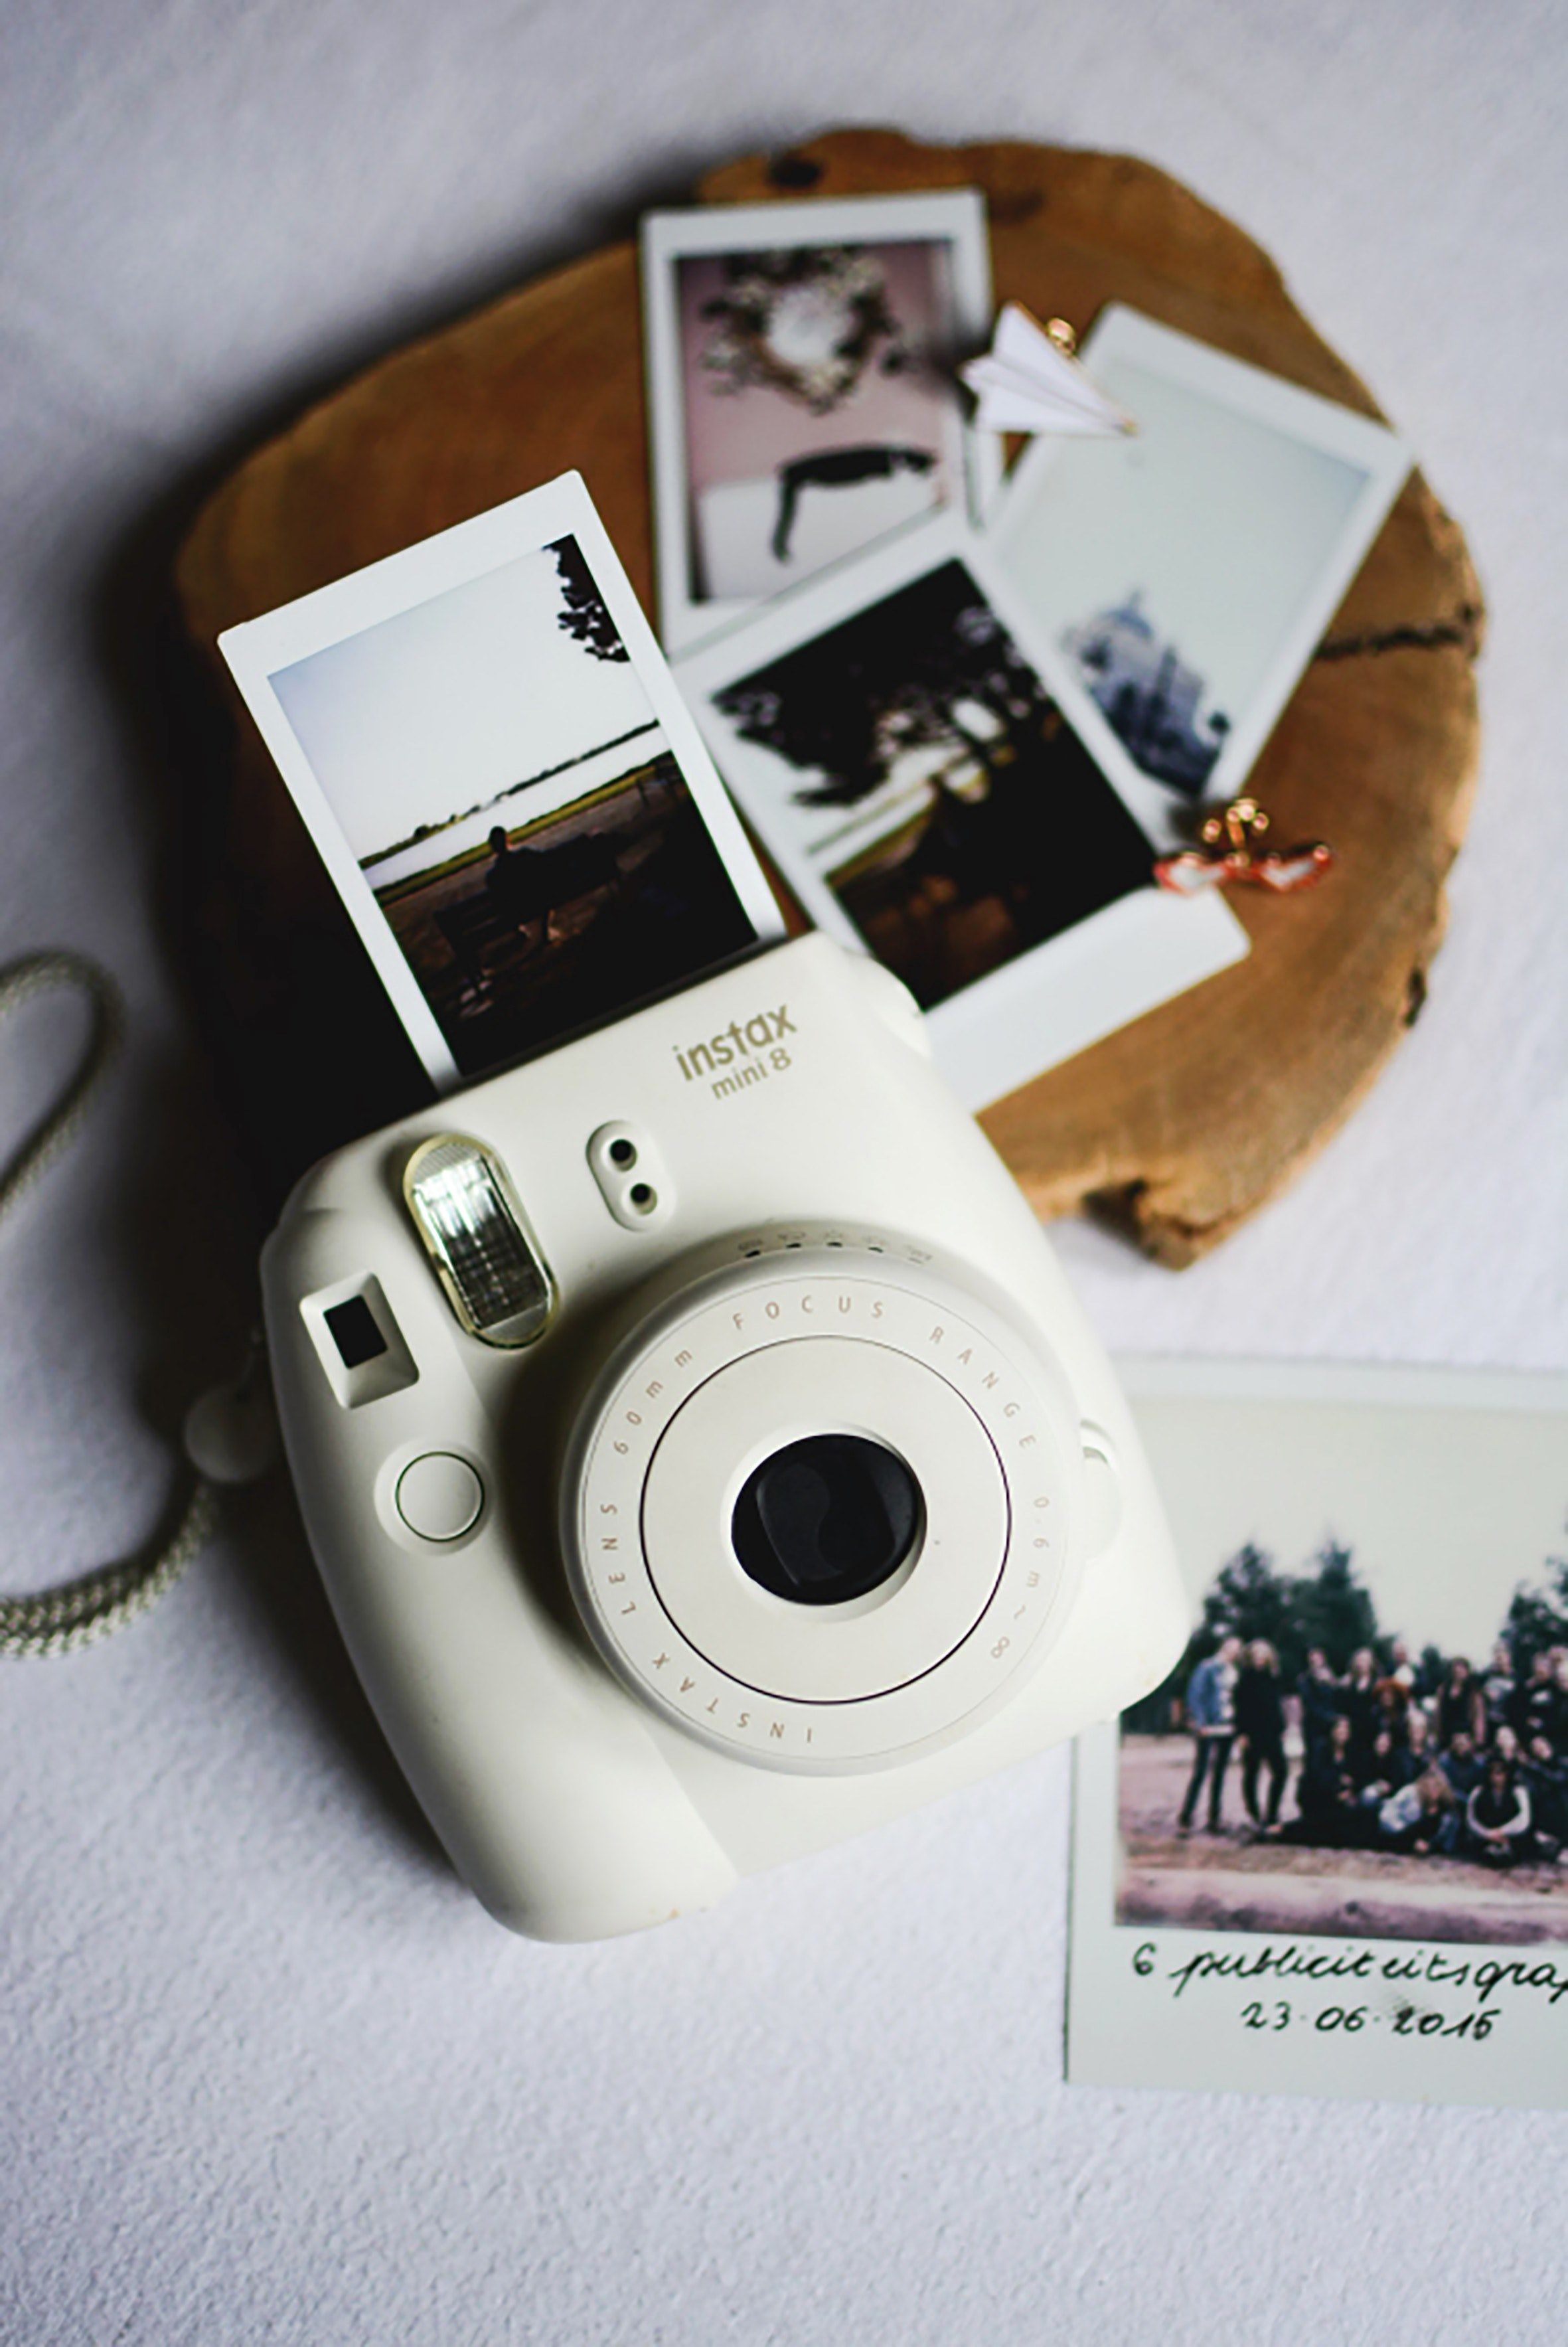 A white instant camera with polaroid photos on a wooden board - Polaroid